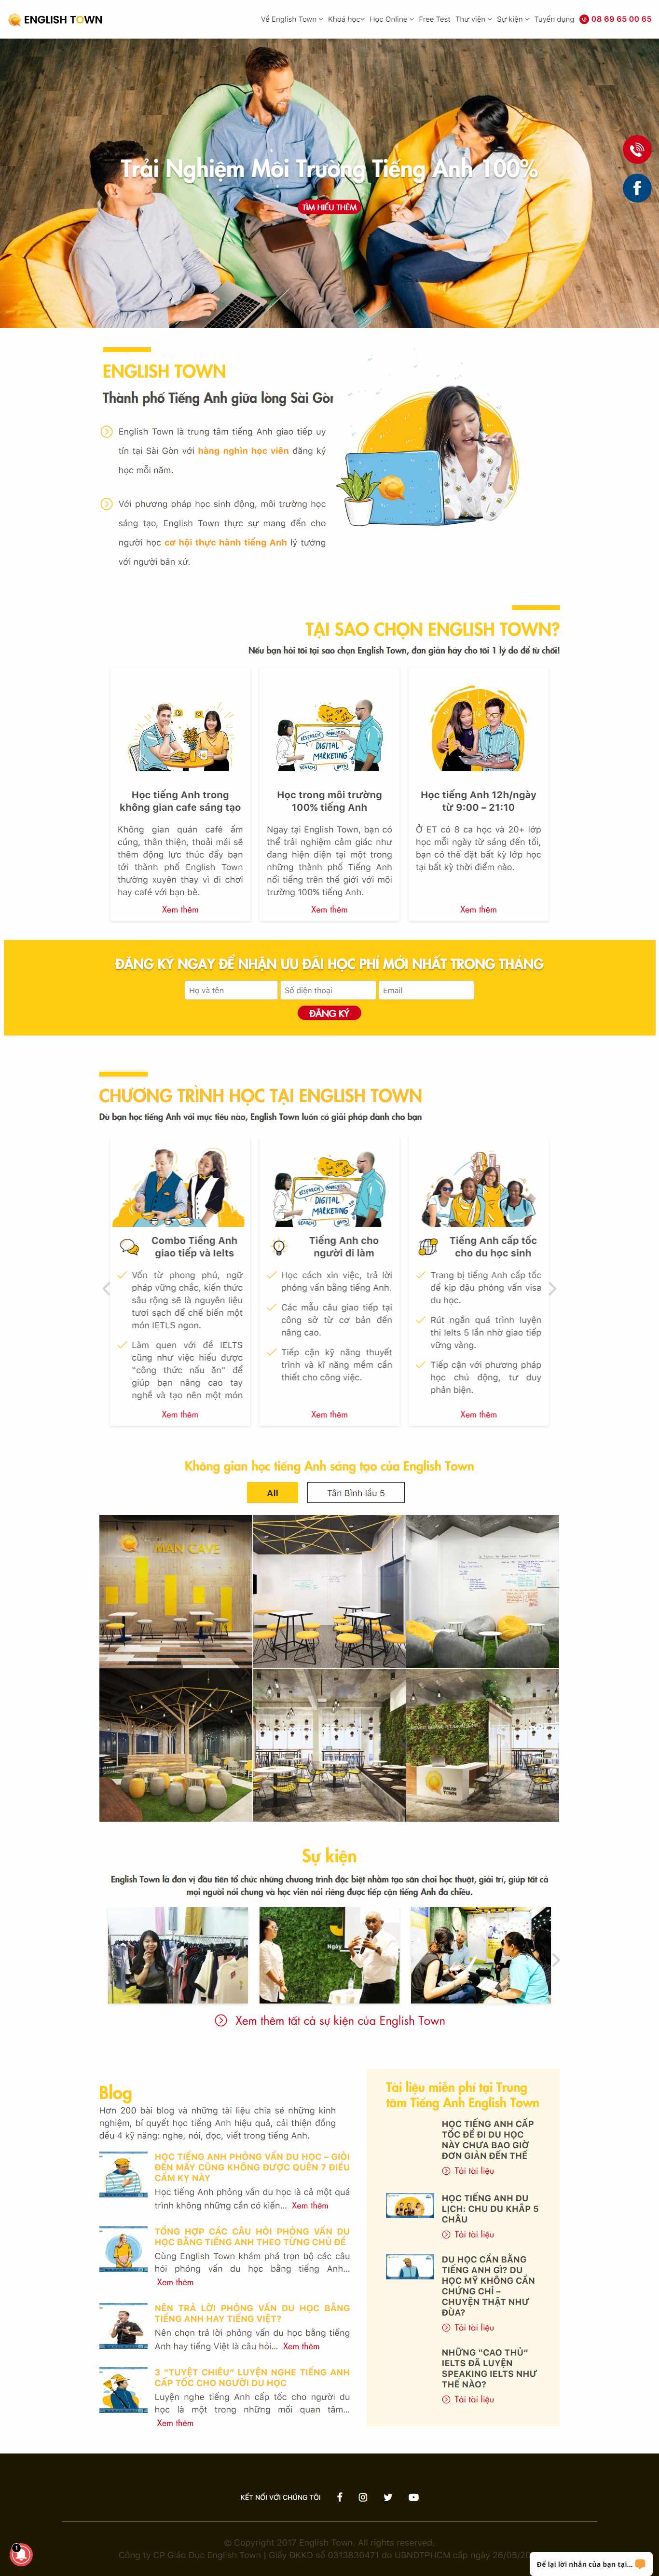 Thiết kế Website trung tâm tiếng anh - englishtown.edu.vn